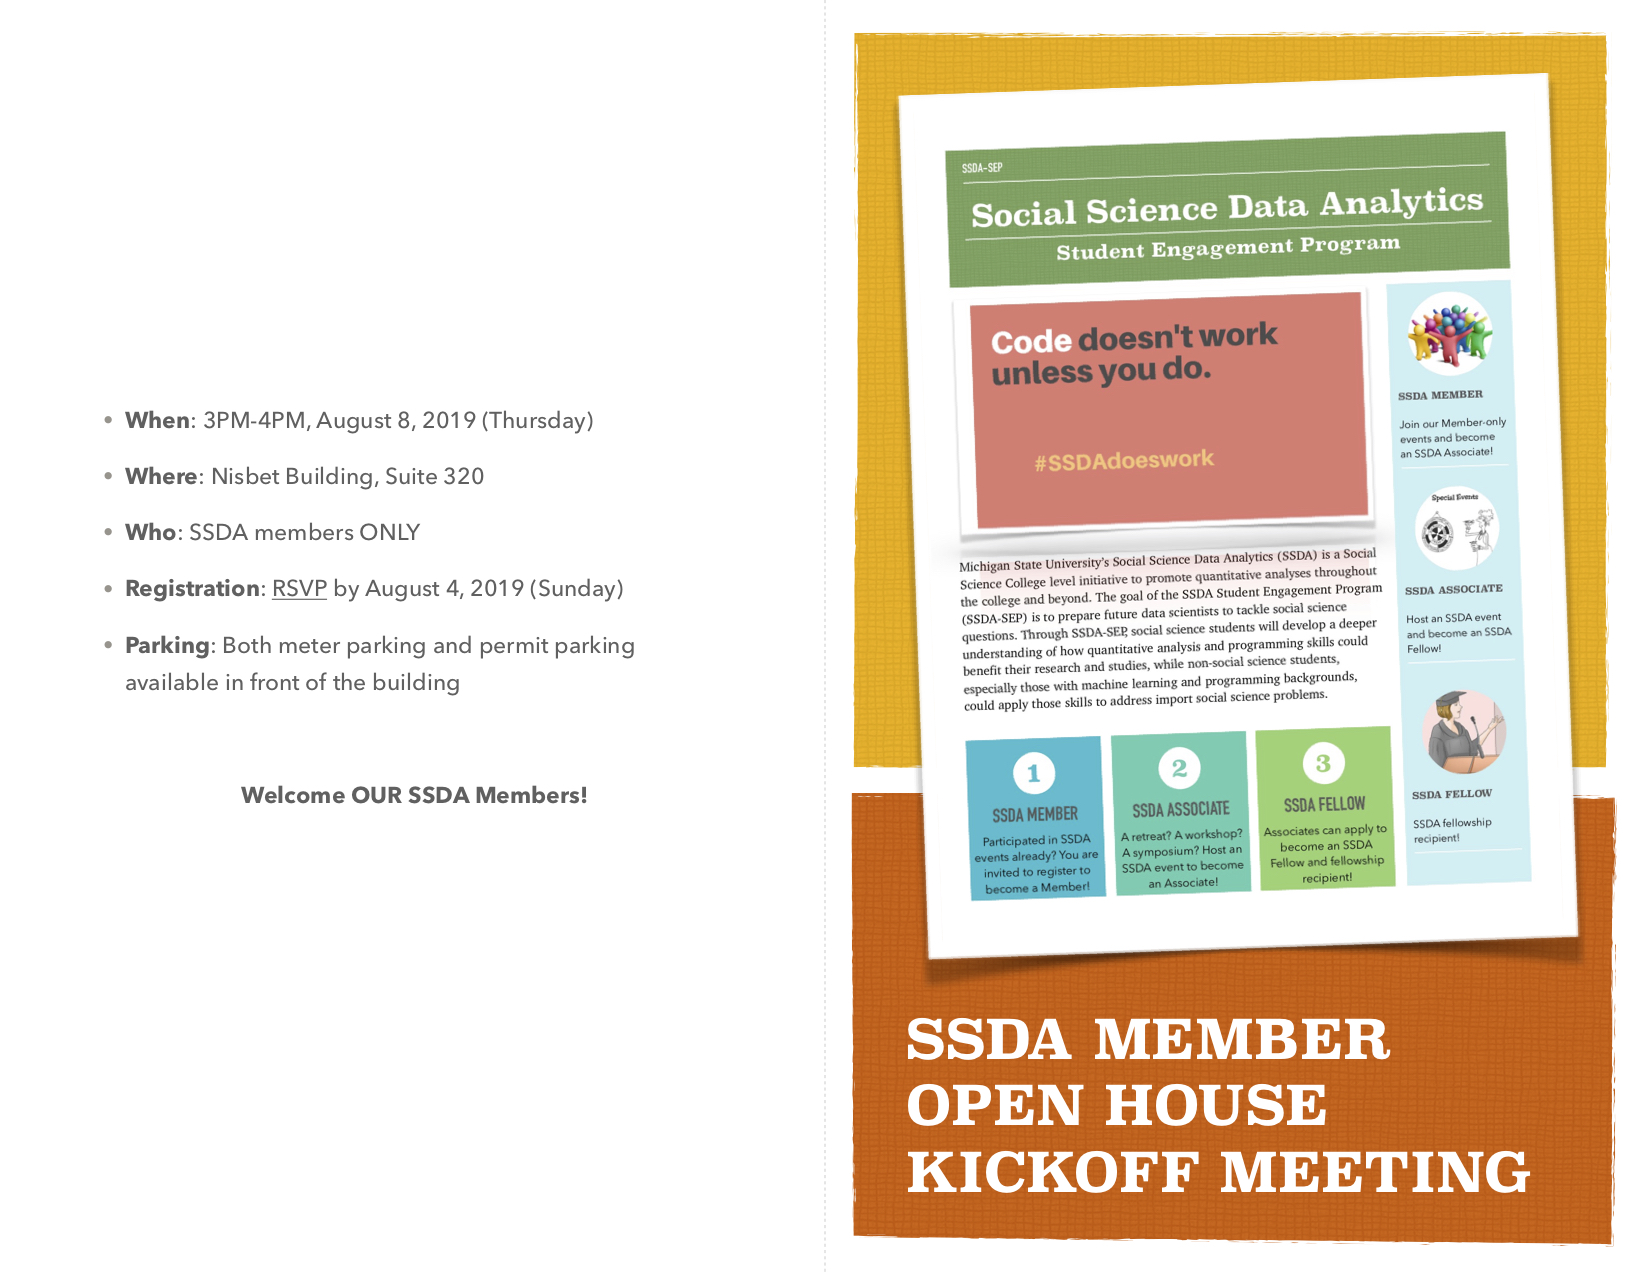 SSDA Member Open House Kickoff Meeting